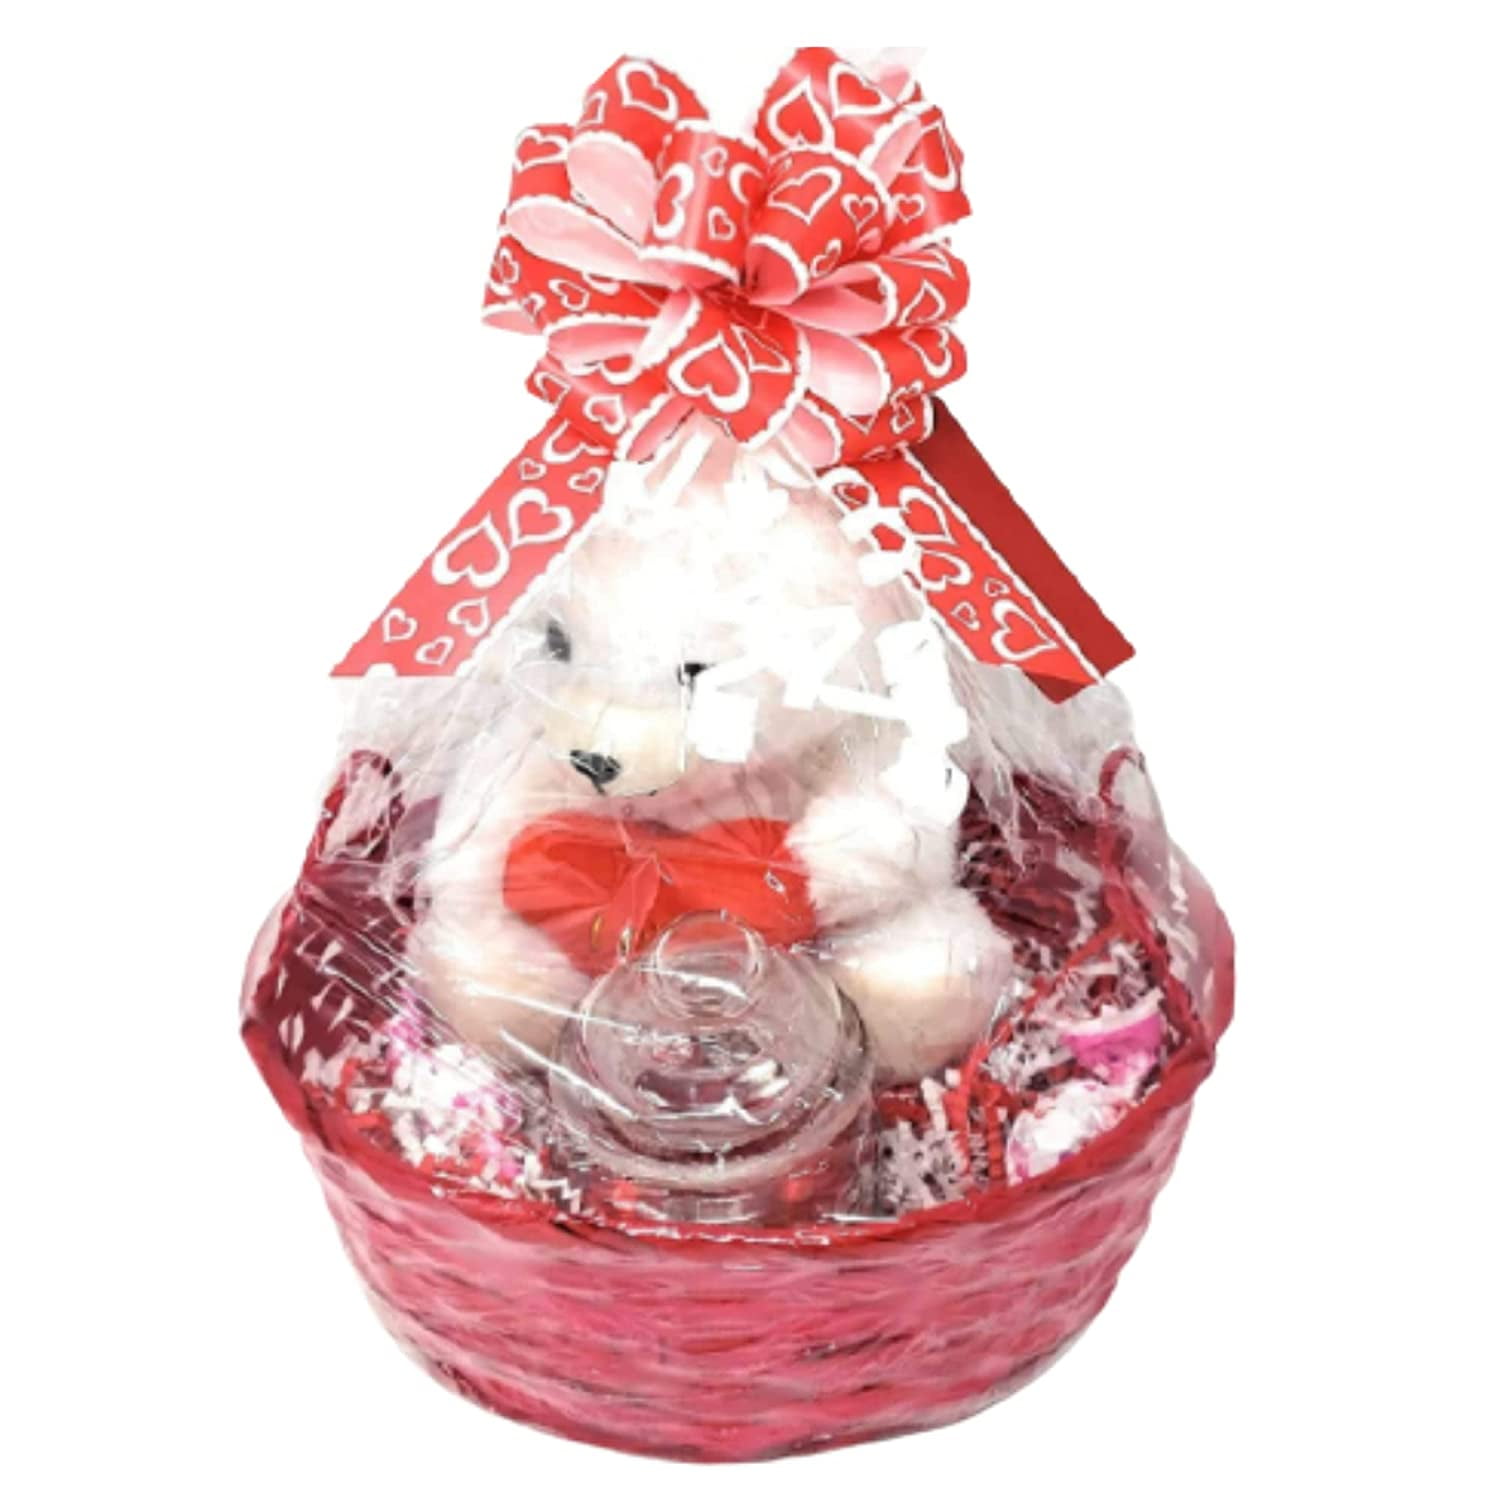 You're So Sweet Valentine's Day Bucket – Boston Gift Baskets